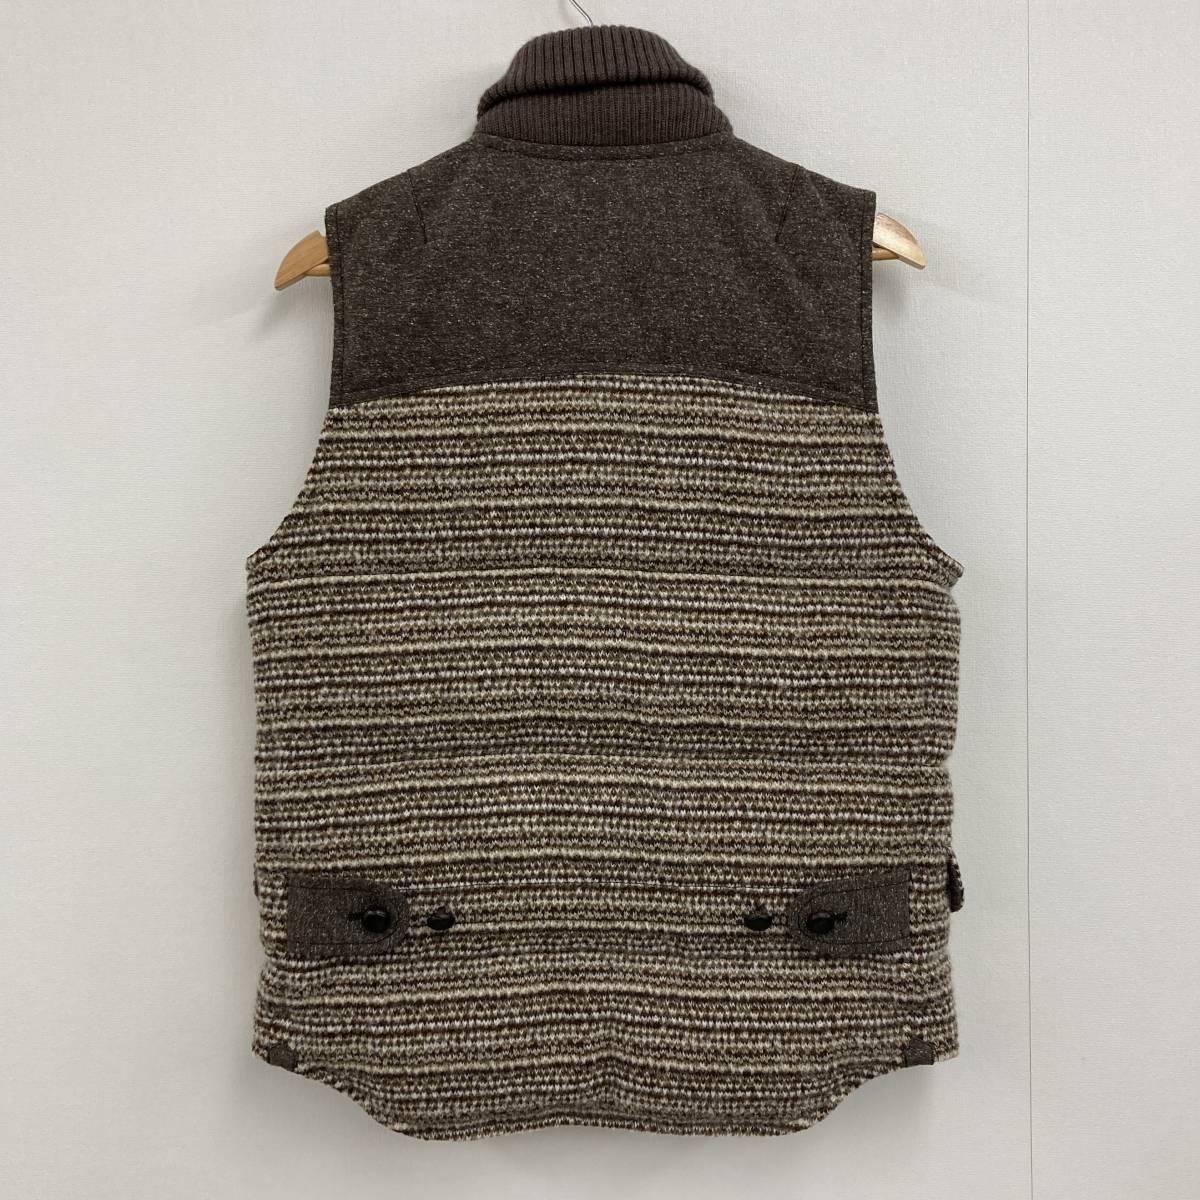 JUNYA WATANABE MAN × DUVETICA wool knitted down vest Junya Watanabe Duvetica jacket blouson archive 3120088